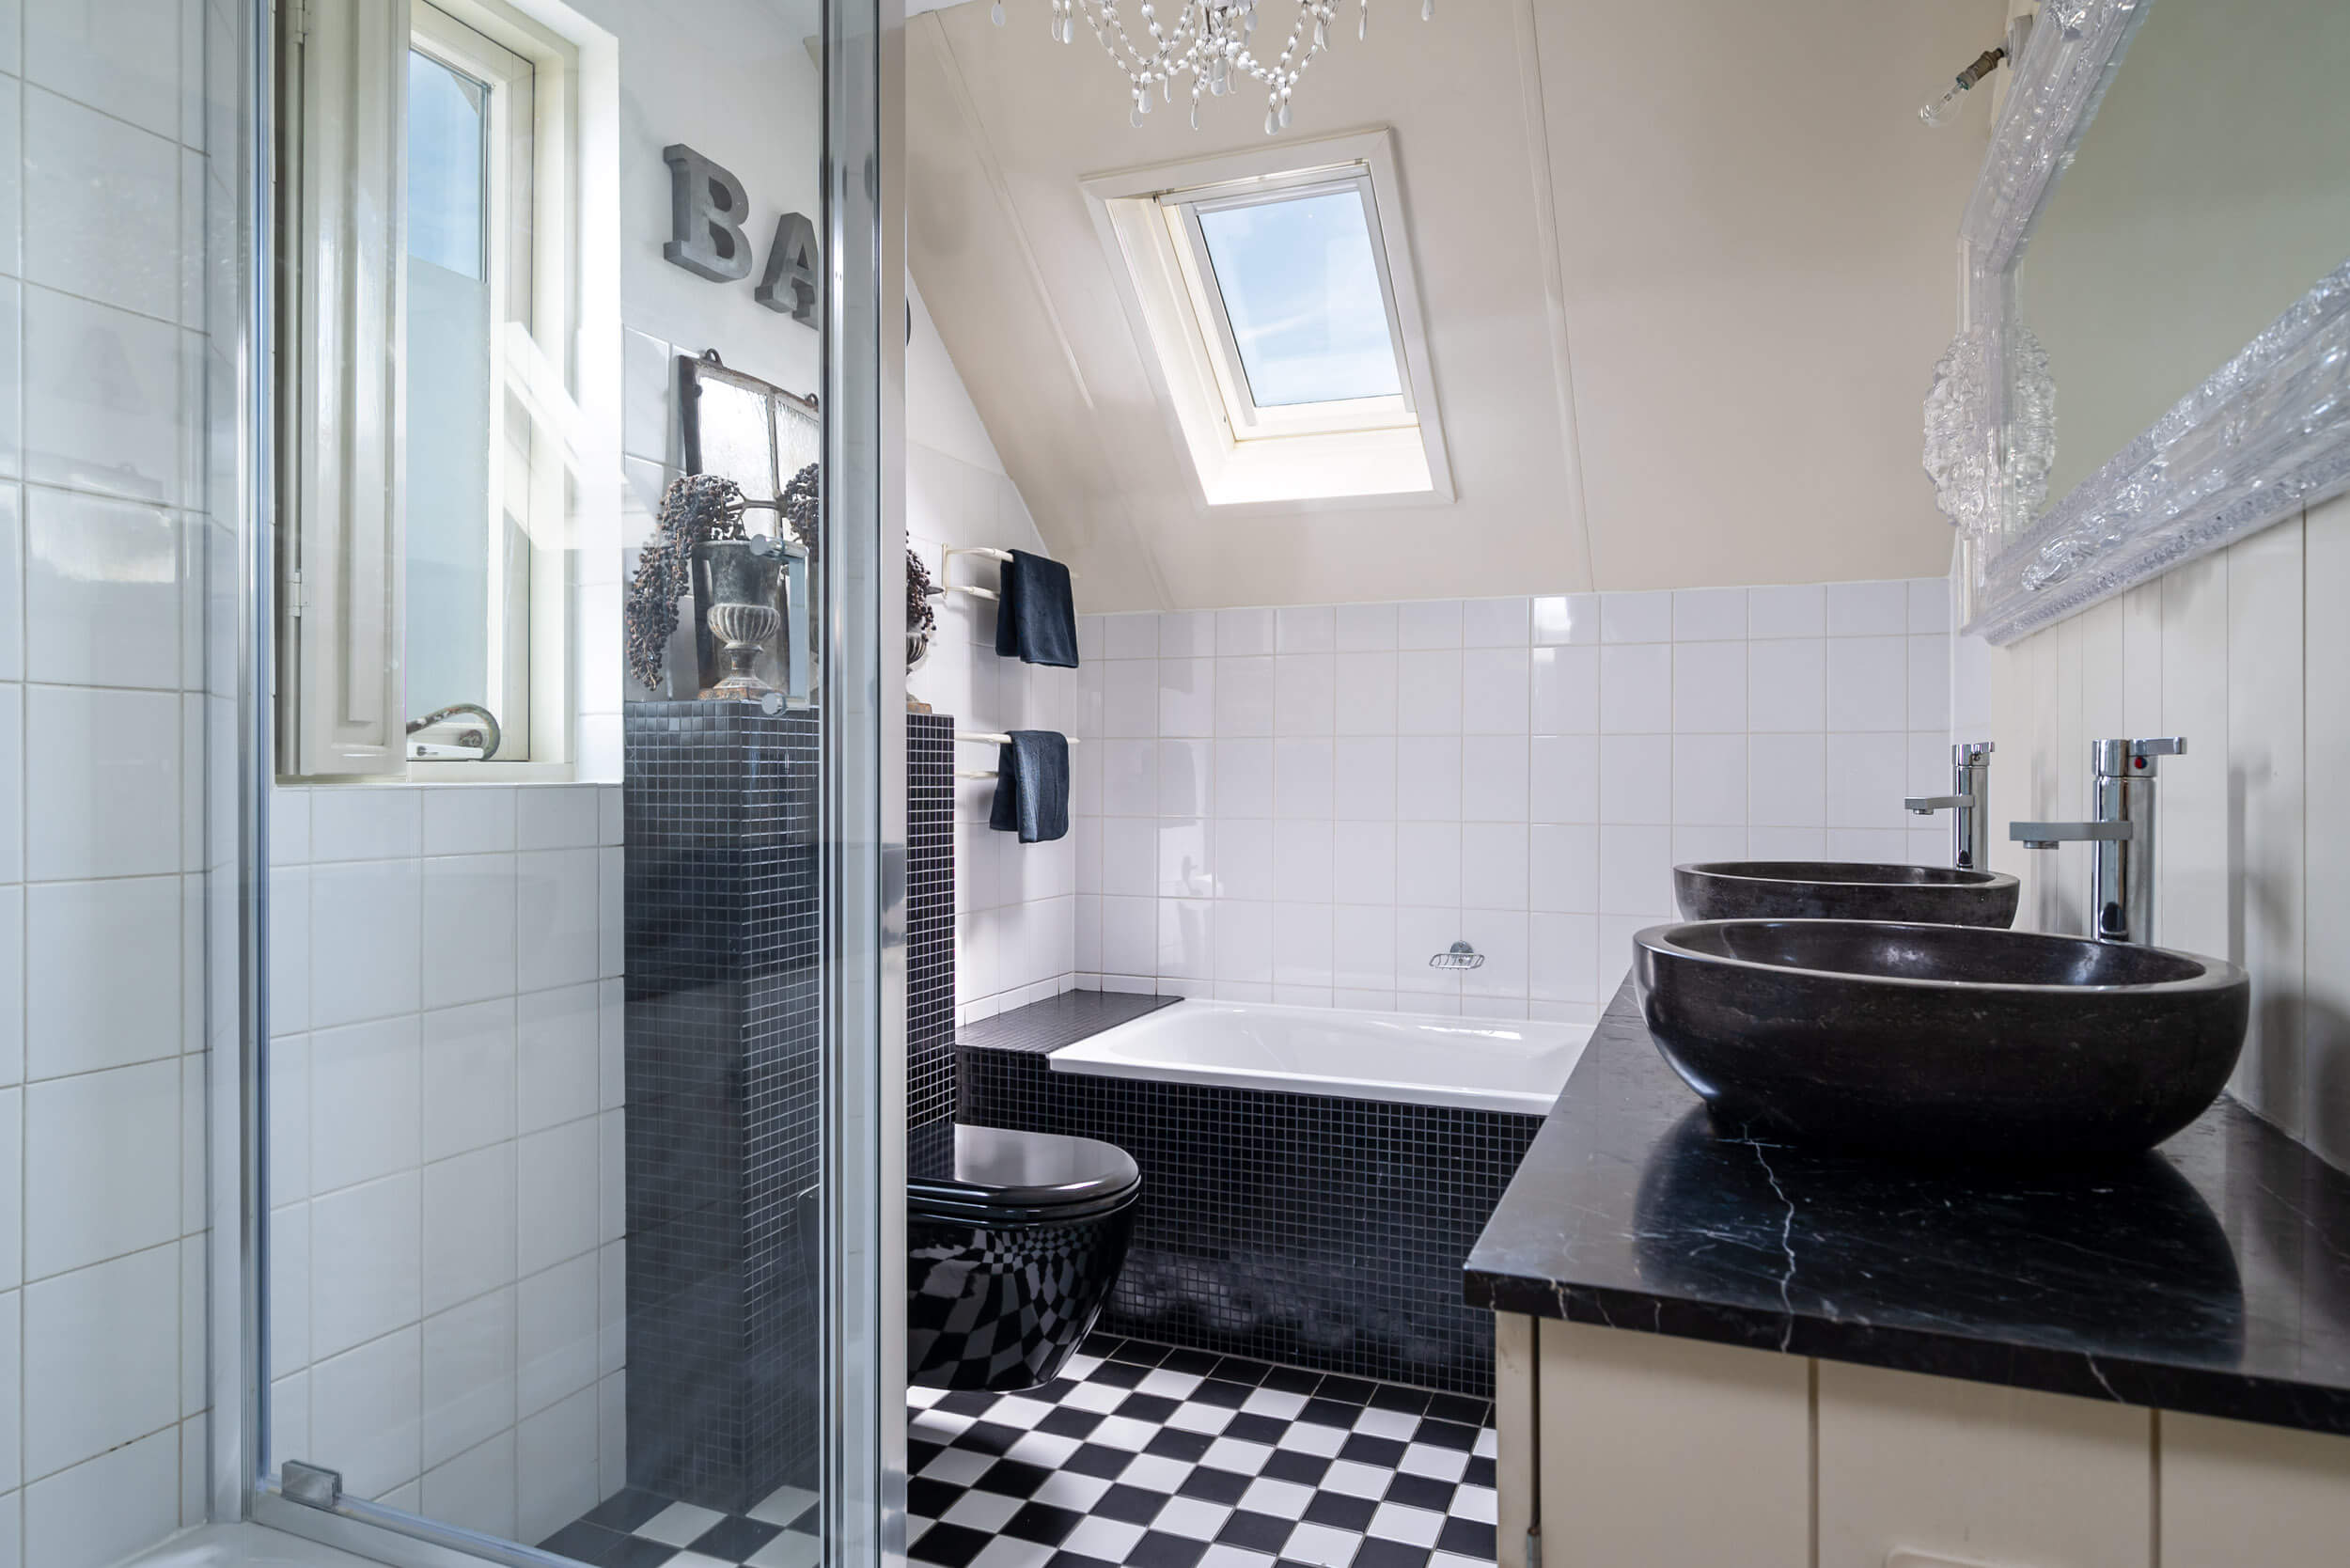 Wieringerwerf, 4 Bedrooms Bedrooms, ,1 BathroomBathrooms,Woonhuis,Te koop,1124